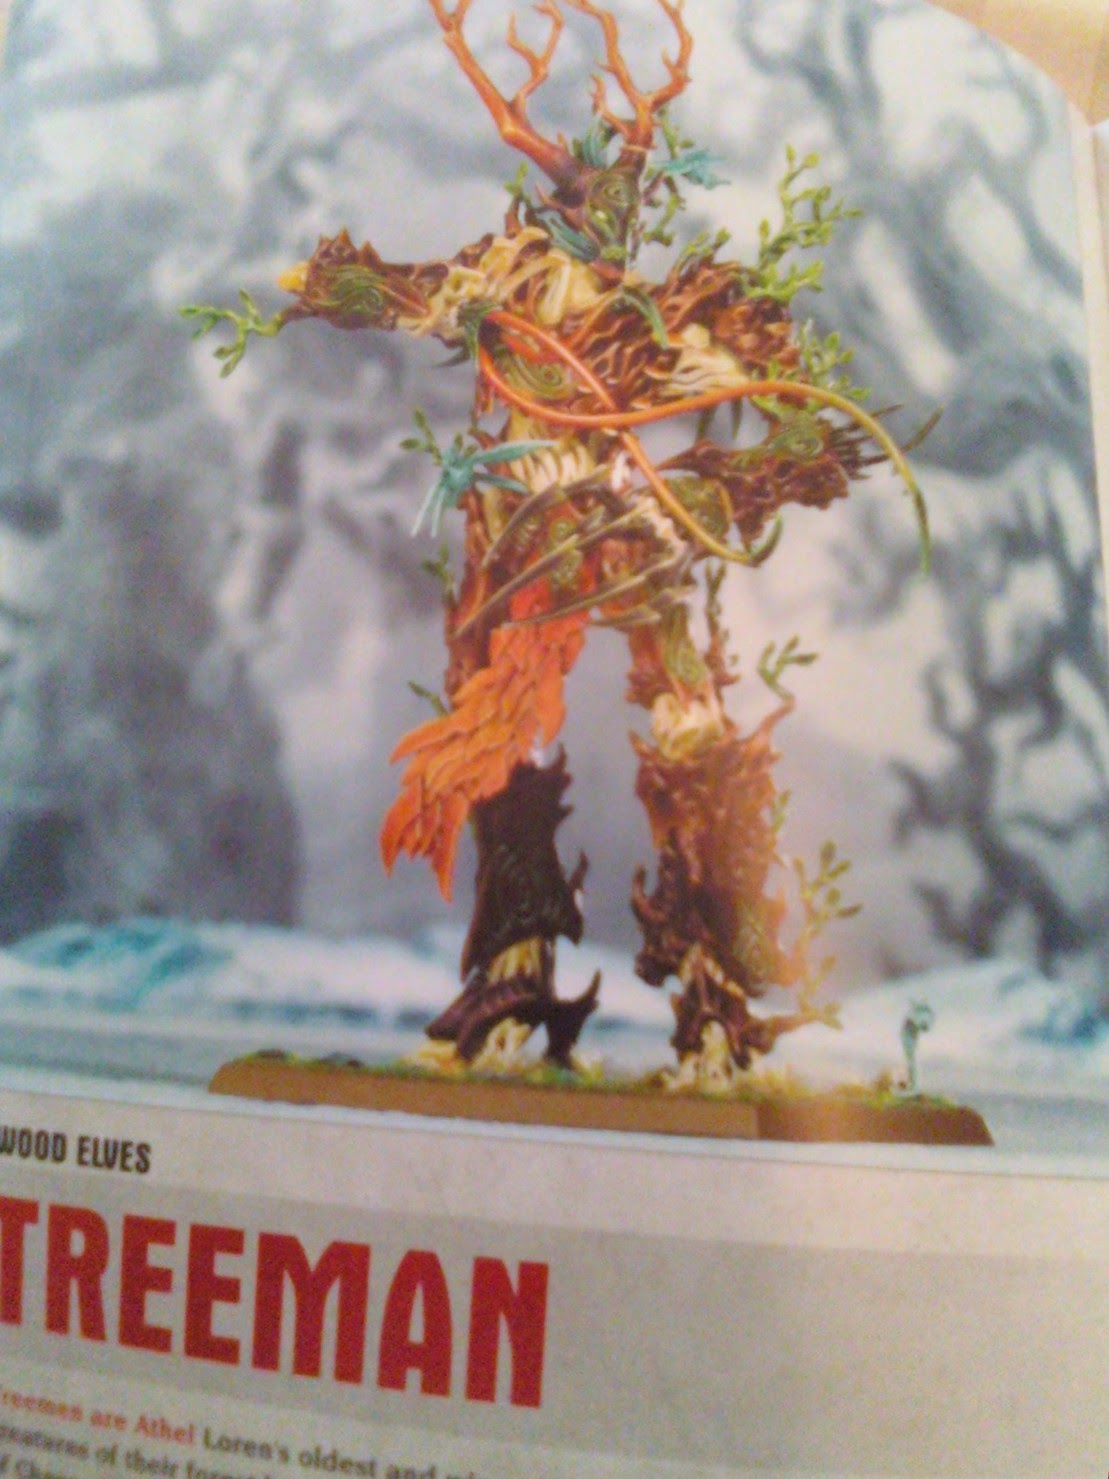 rumores wh - Página 10 White+dwaef+wood+elves+new+treeman